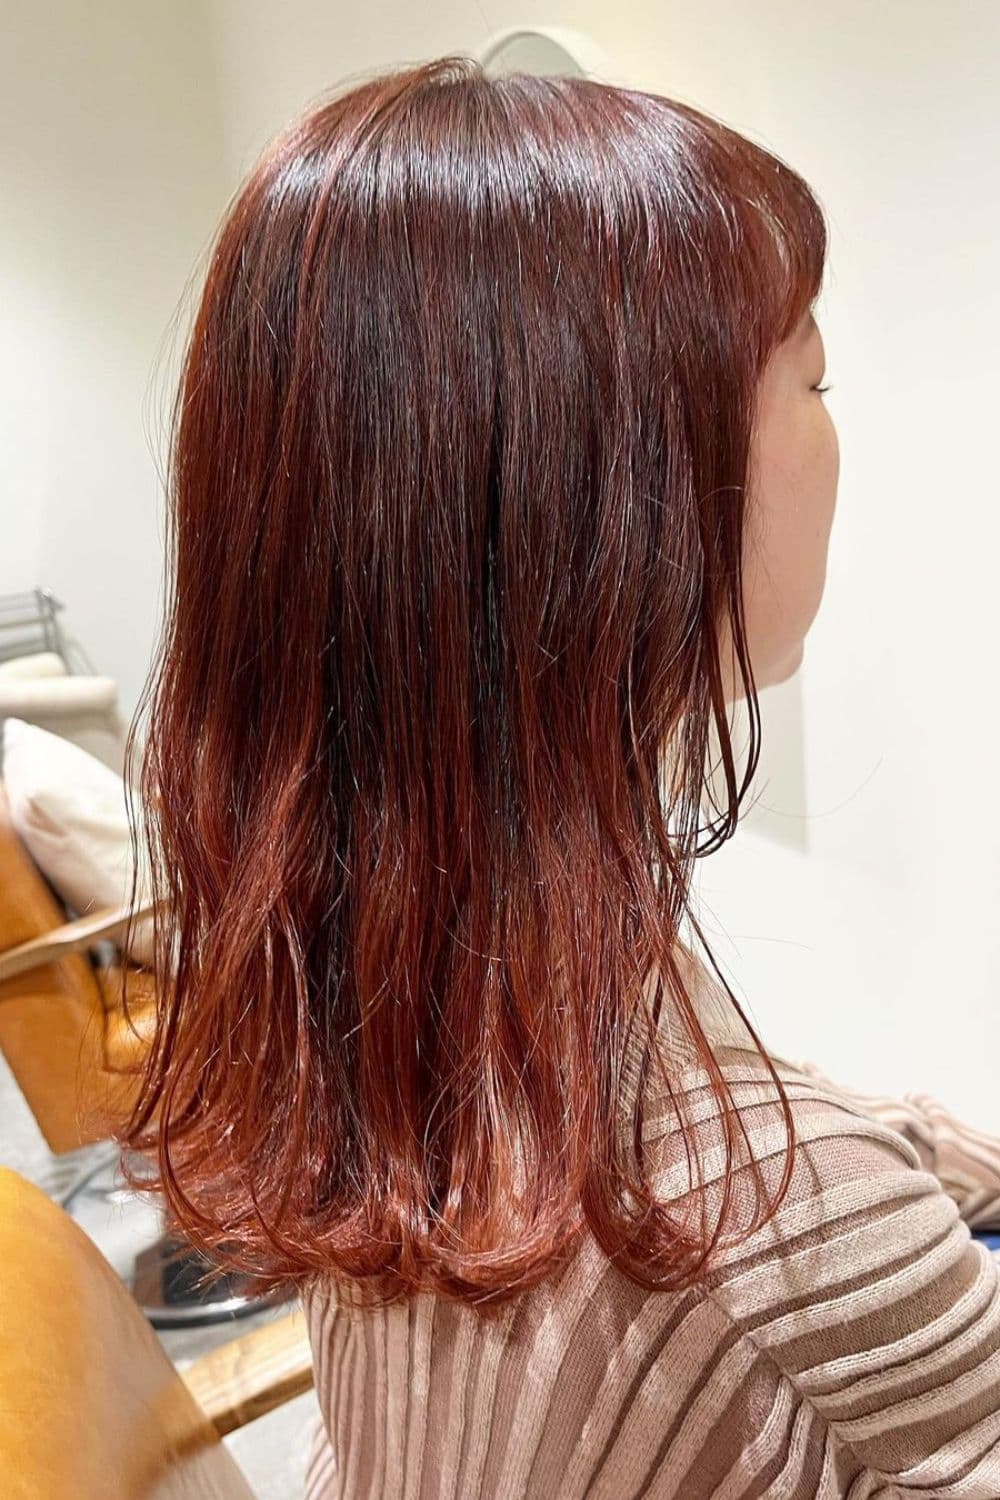 A woman with medium-length subtle red-orange hair.